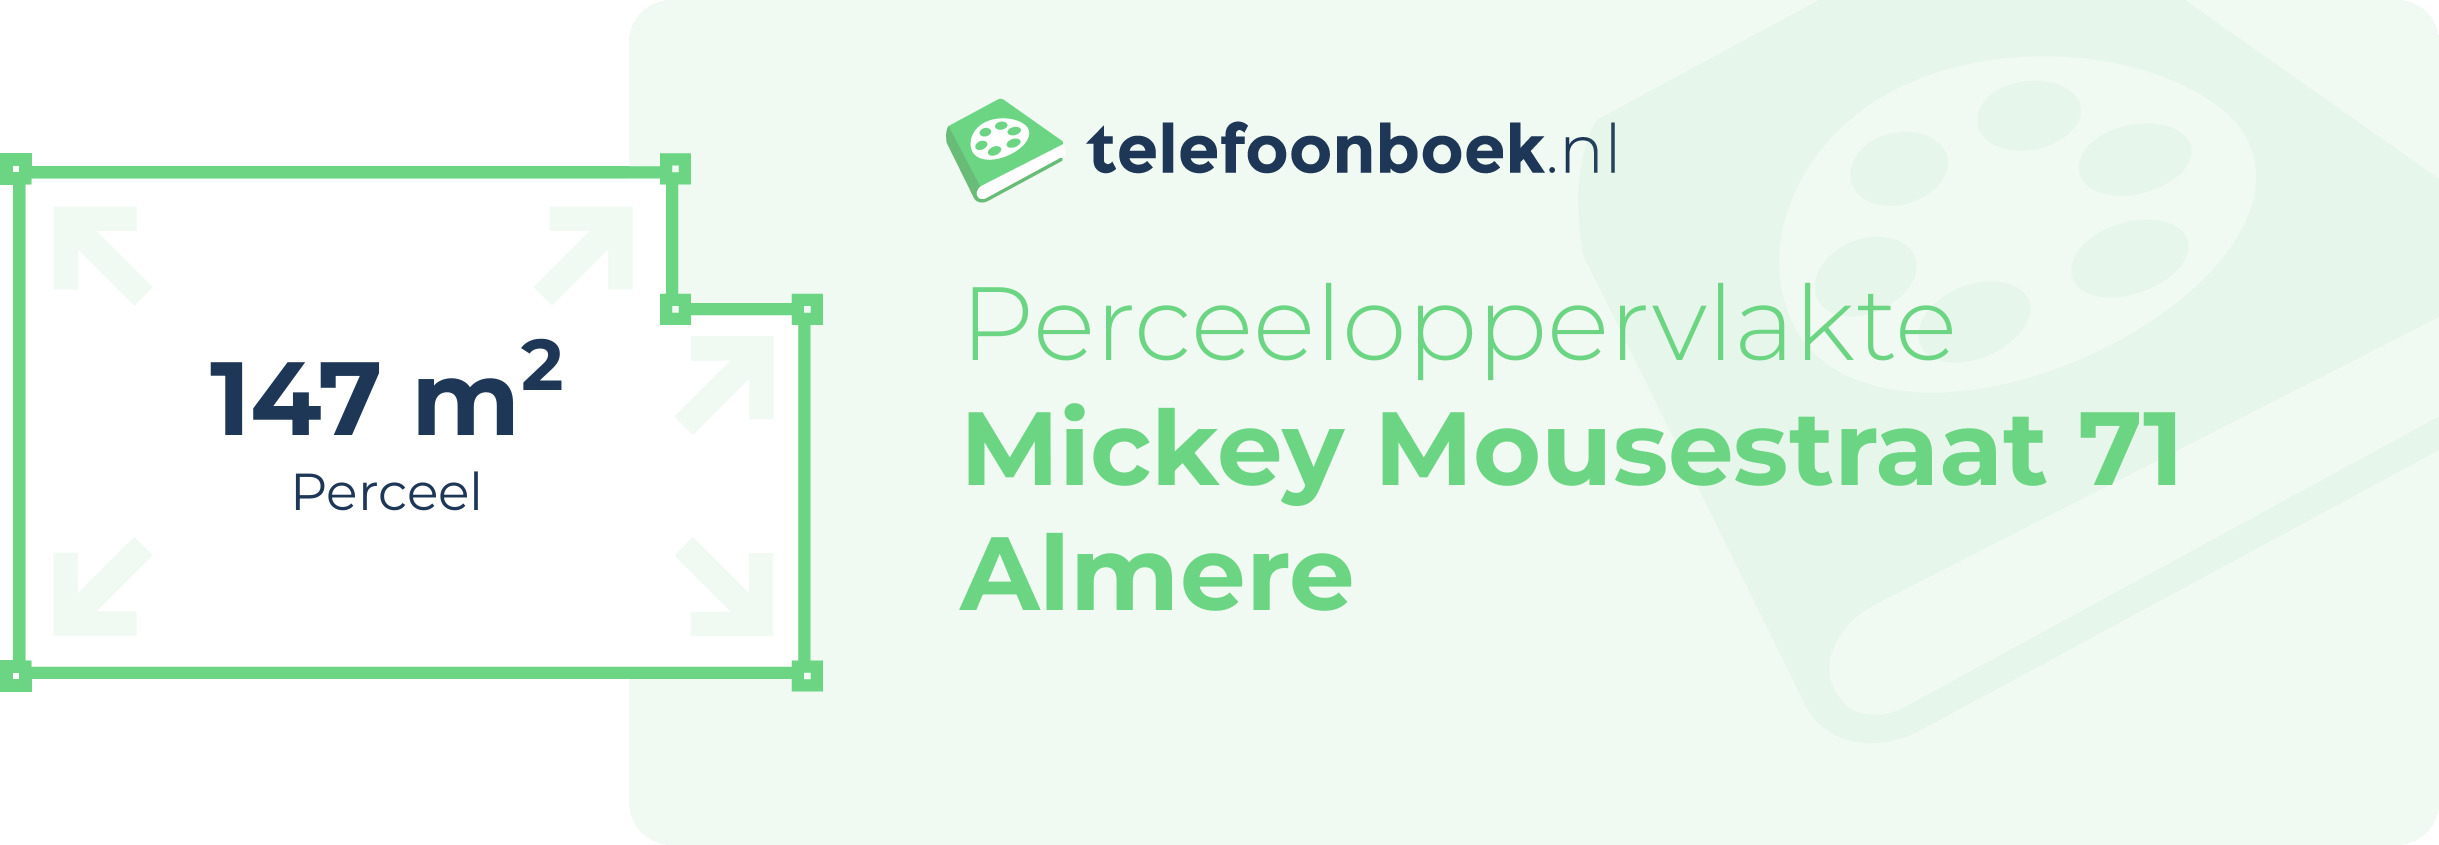 Perceeloppervlakte Mickey Mousestraat 71 Almere